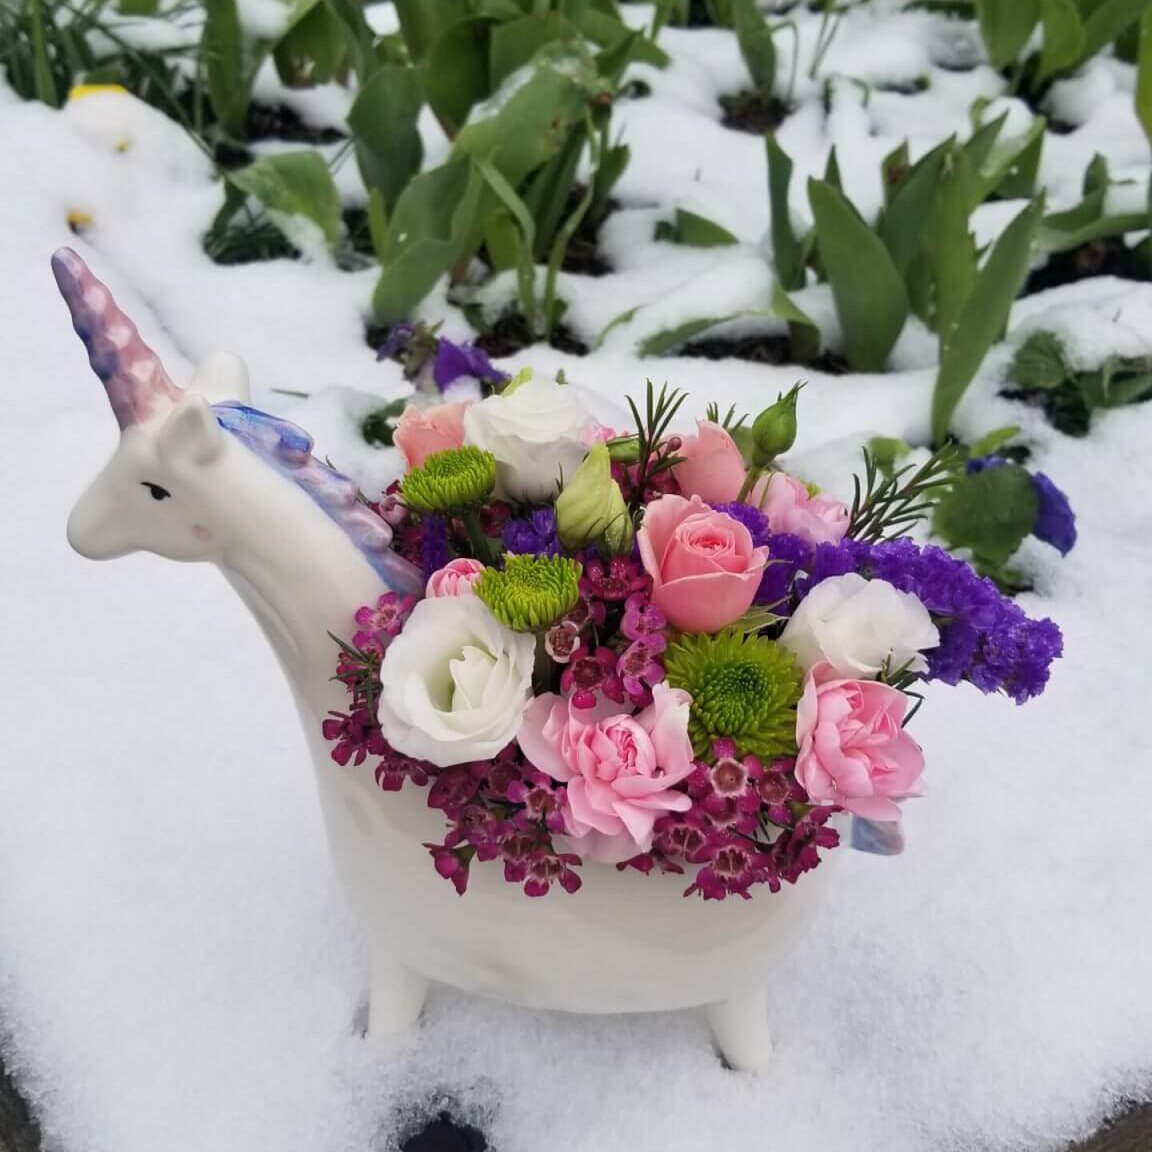 Floral arrangement in the snow